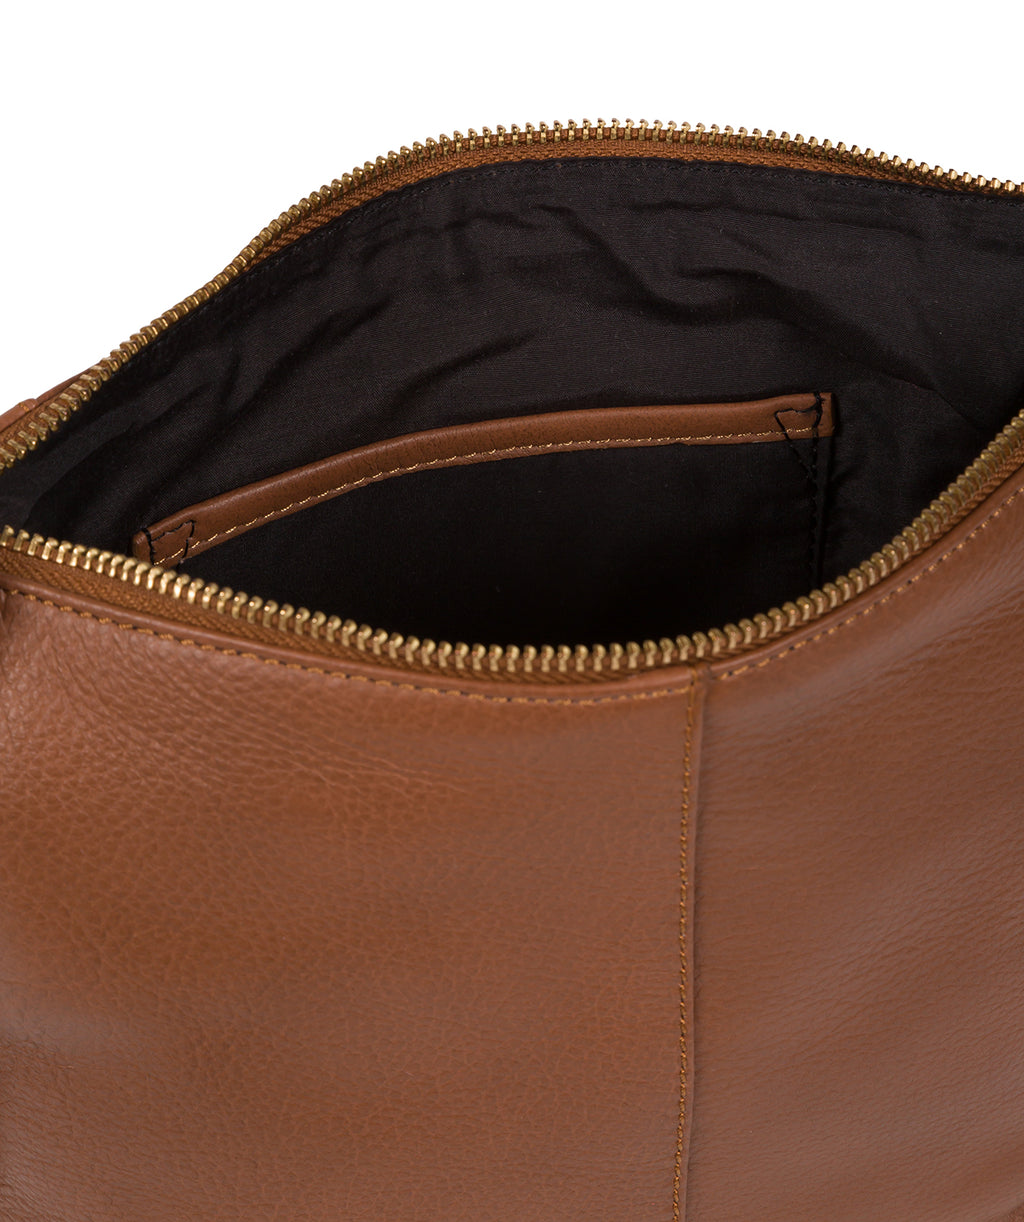 Tan Leather Crossbody Bag 'Belgravia' by Cultured London – Pure ...